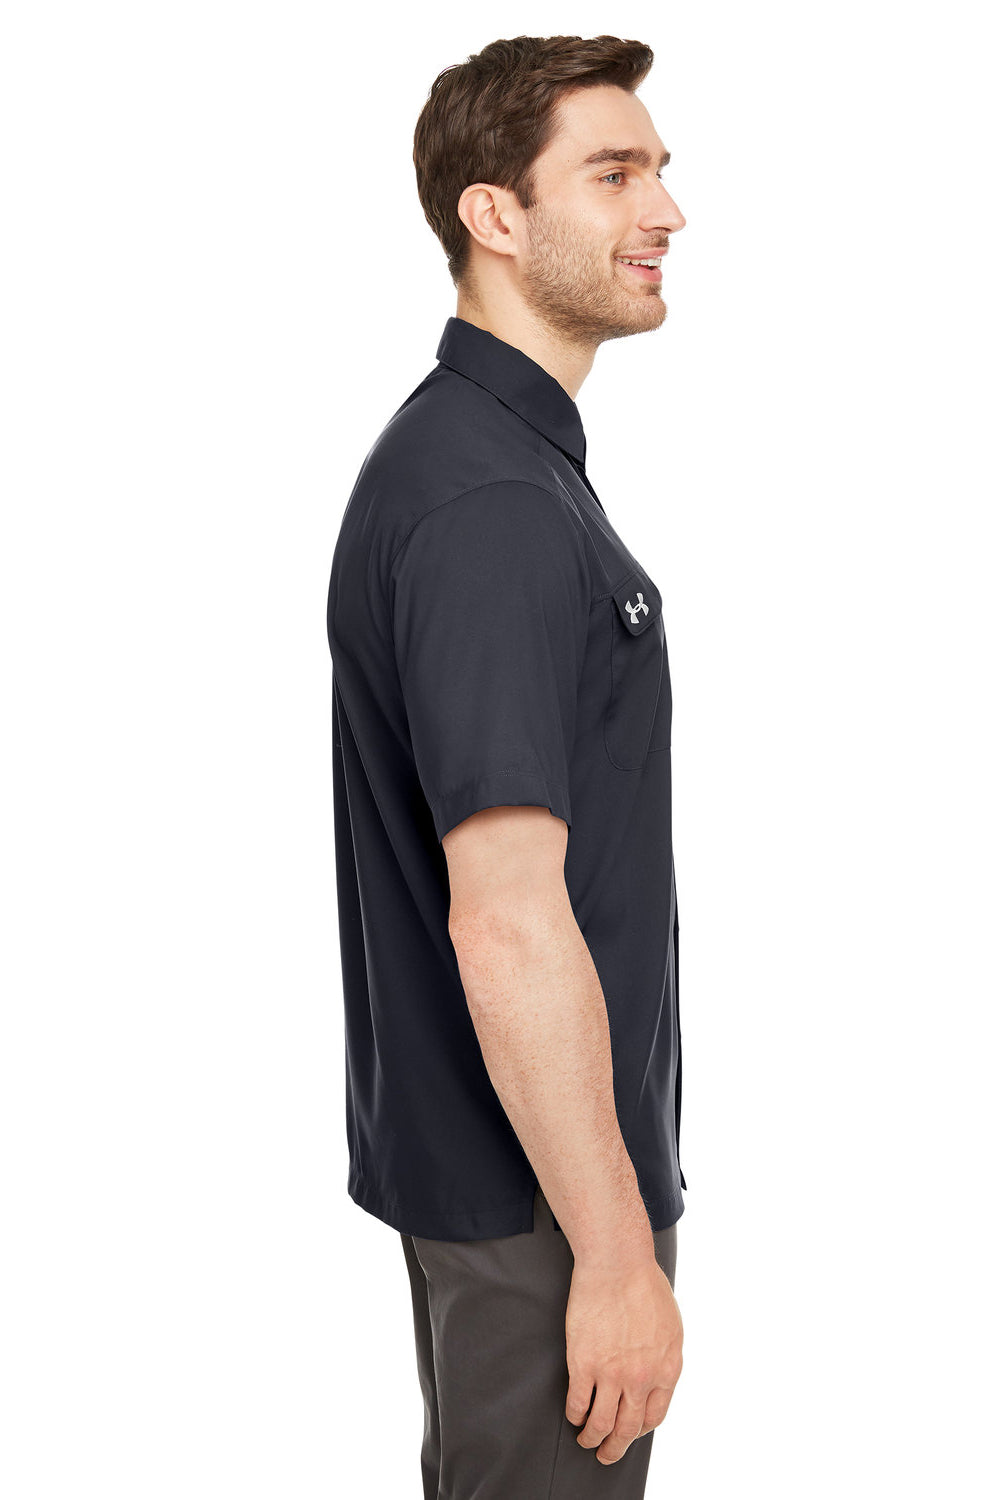 Under Armour 1351360 Mens Motivate Moisture Wicking Short Sleeve Button Down Shirt w/ Pocket Black Model Side